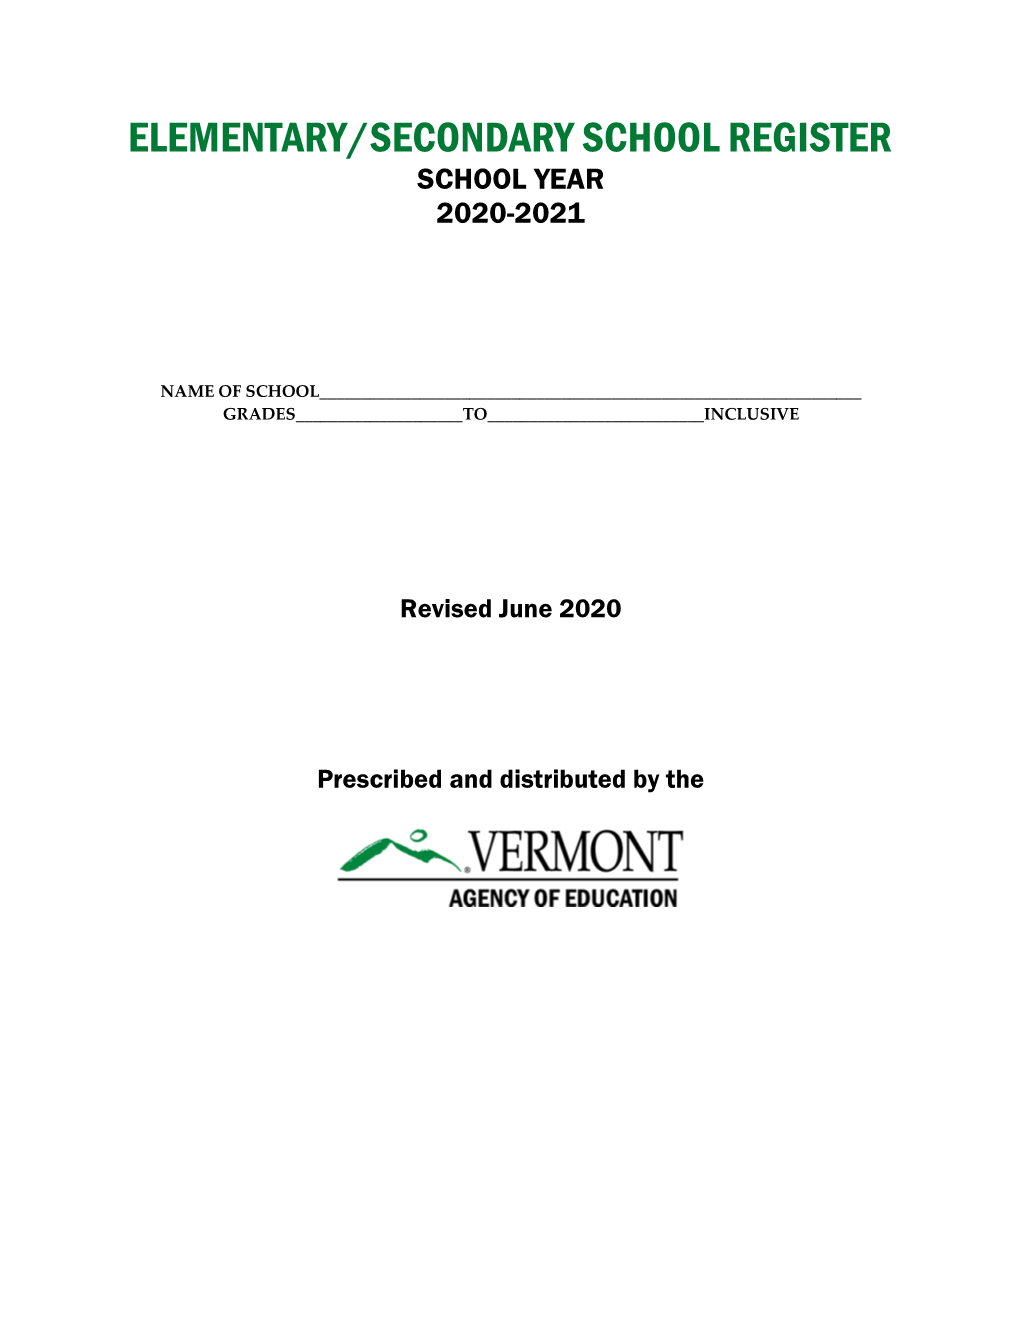 Elementary-Secondary School Register 2020-2021